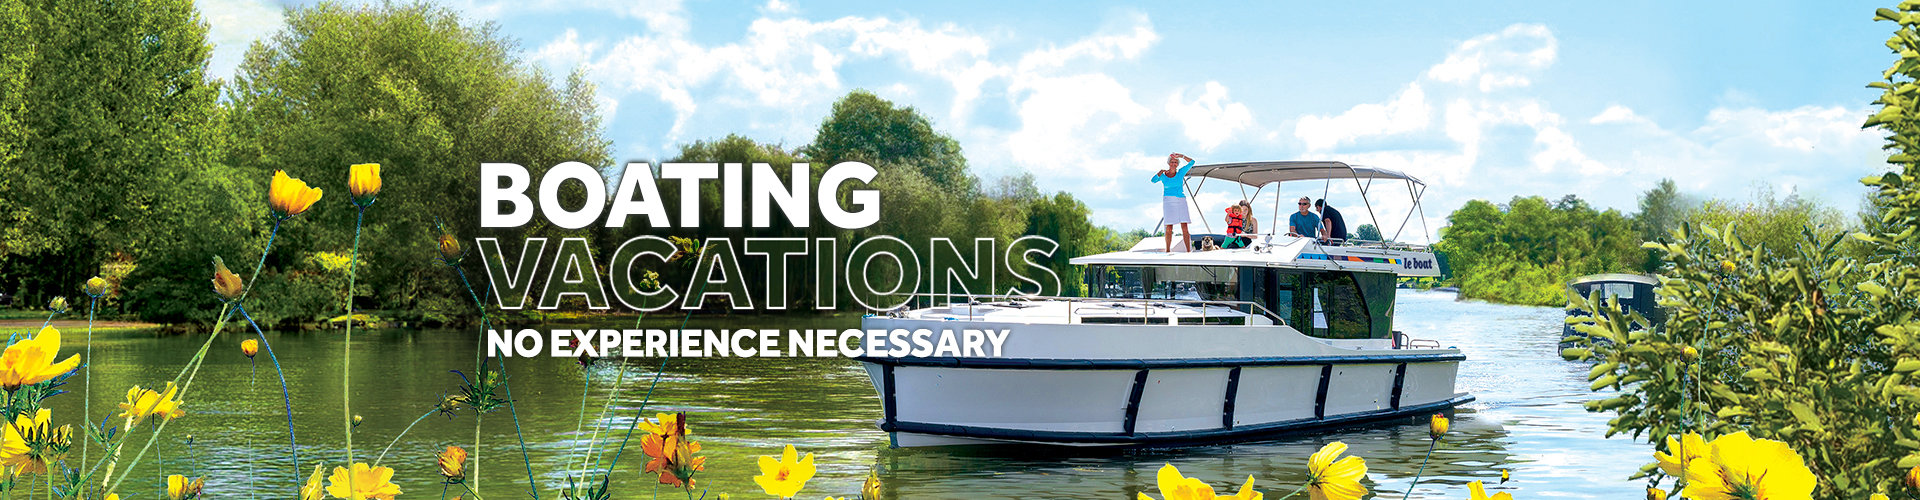 River cruises, Boat rental vacations